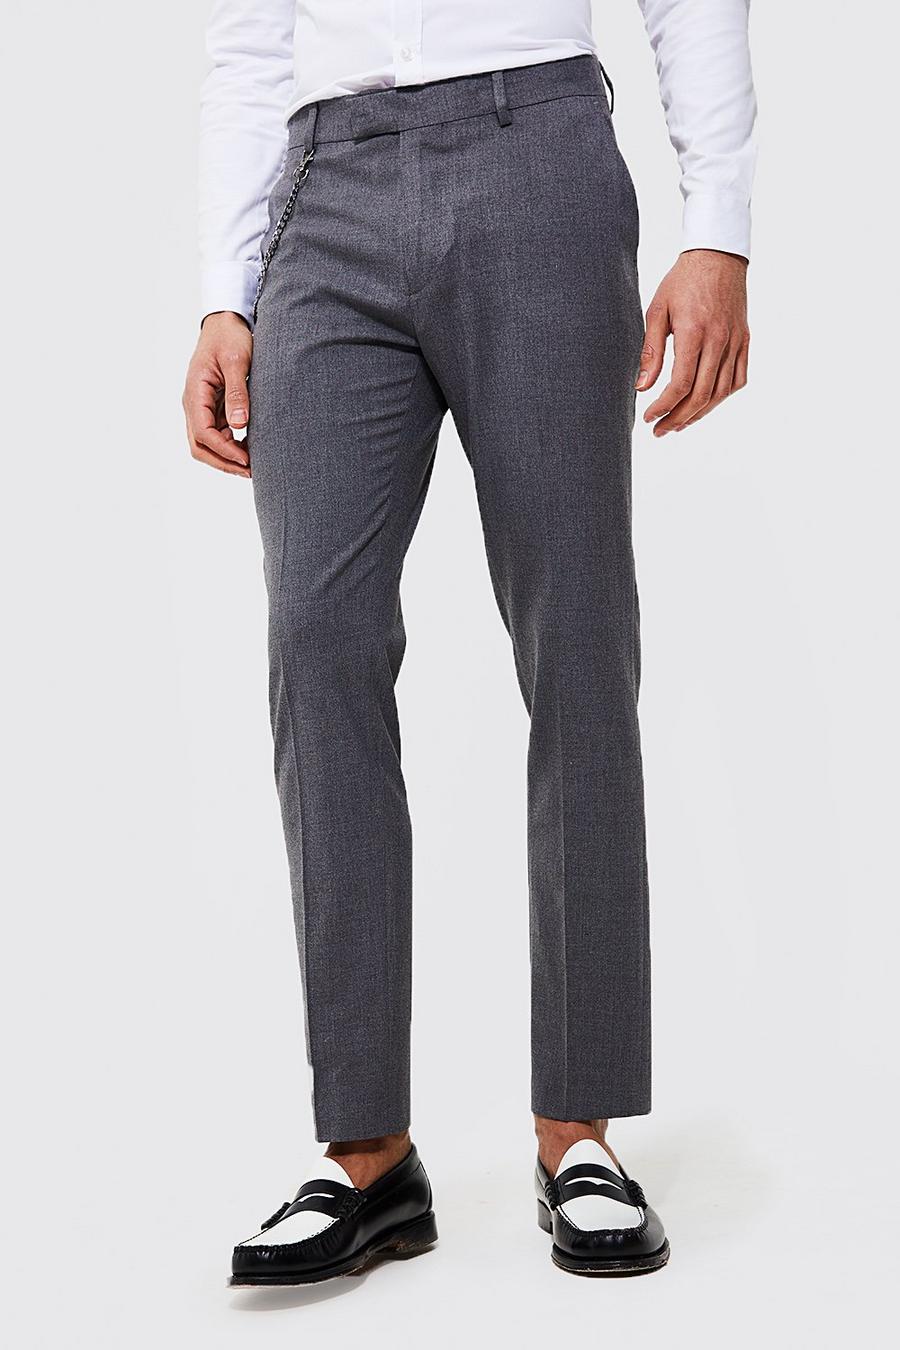 Pantaloni Smart Skinny Fit in tinta unita con catena, Light grey grigio